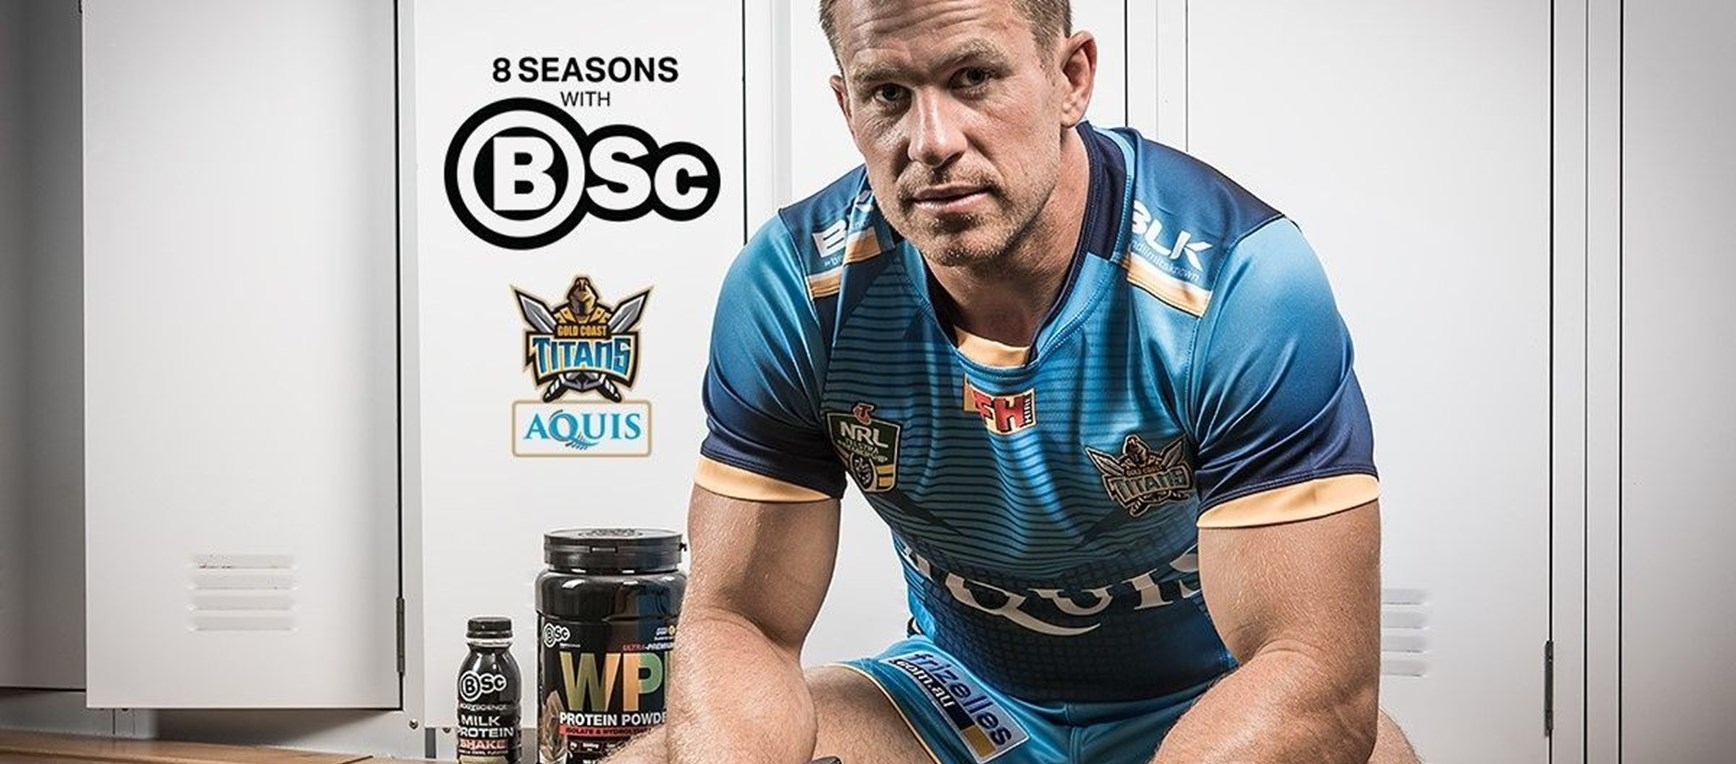 Titans sponsor Body Science re-signs partnership for 8th season